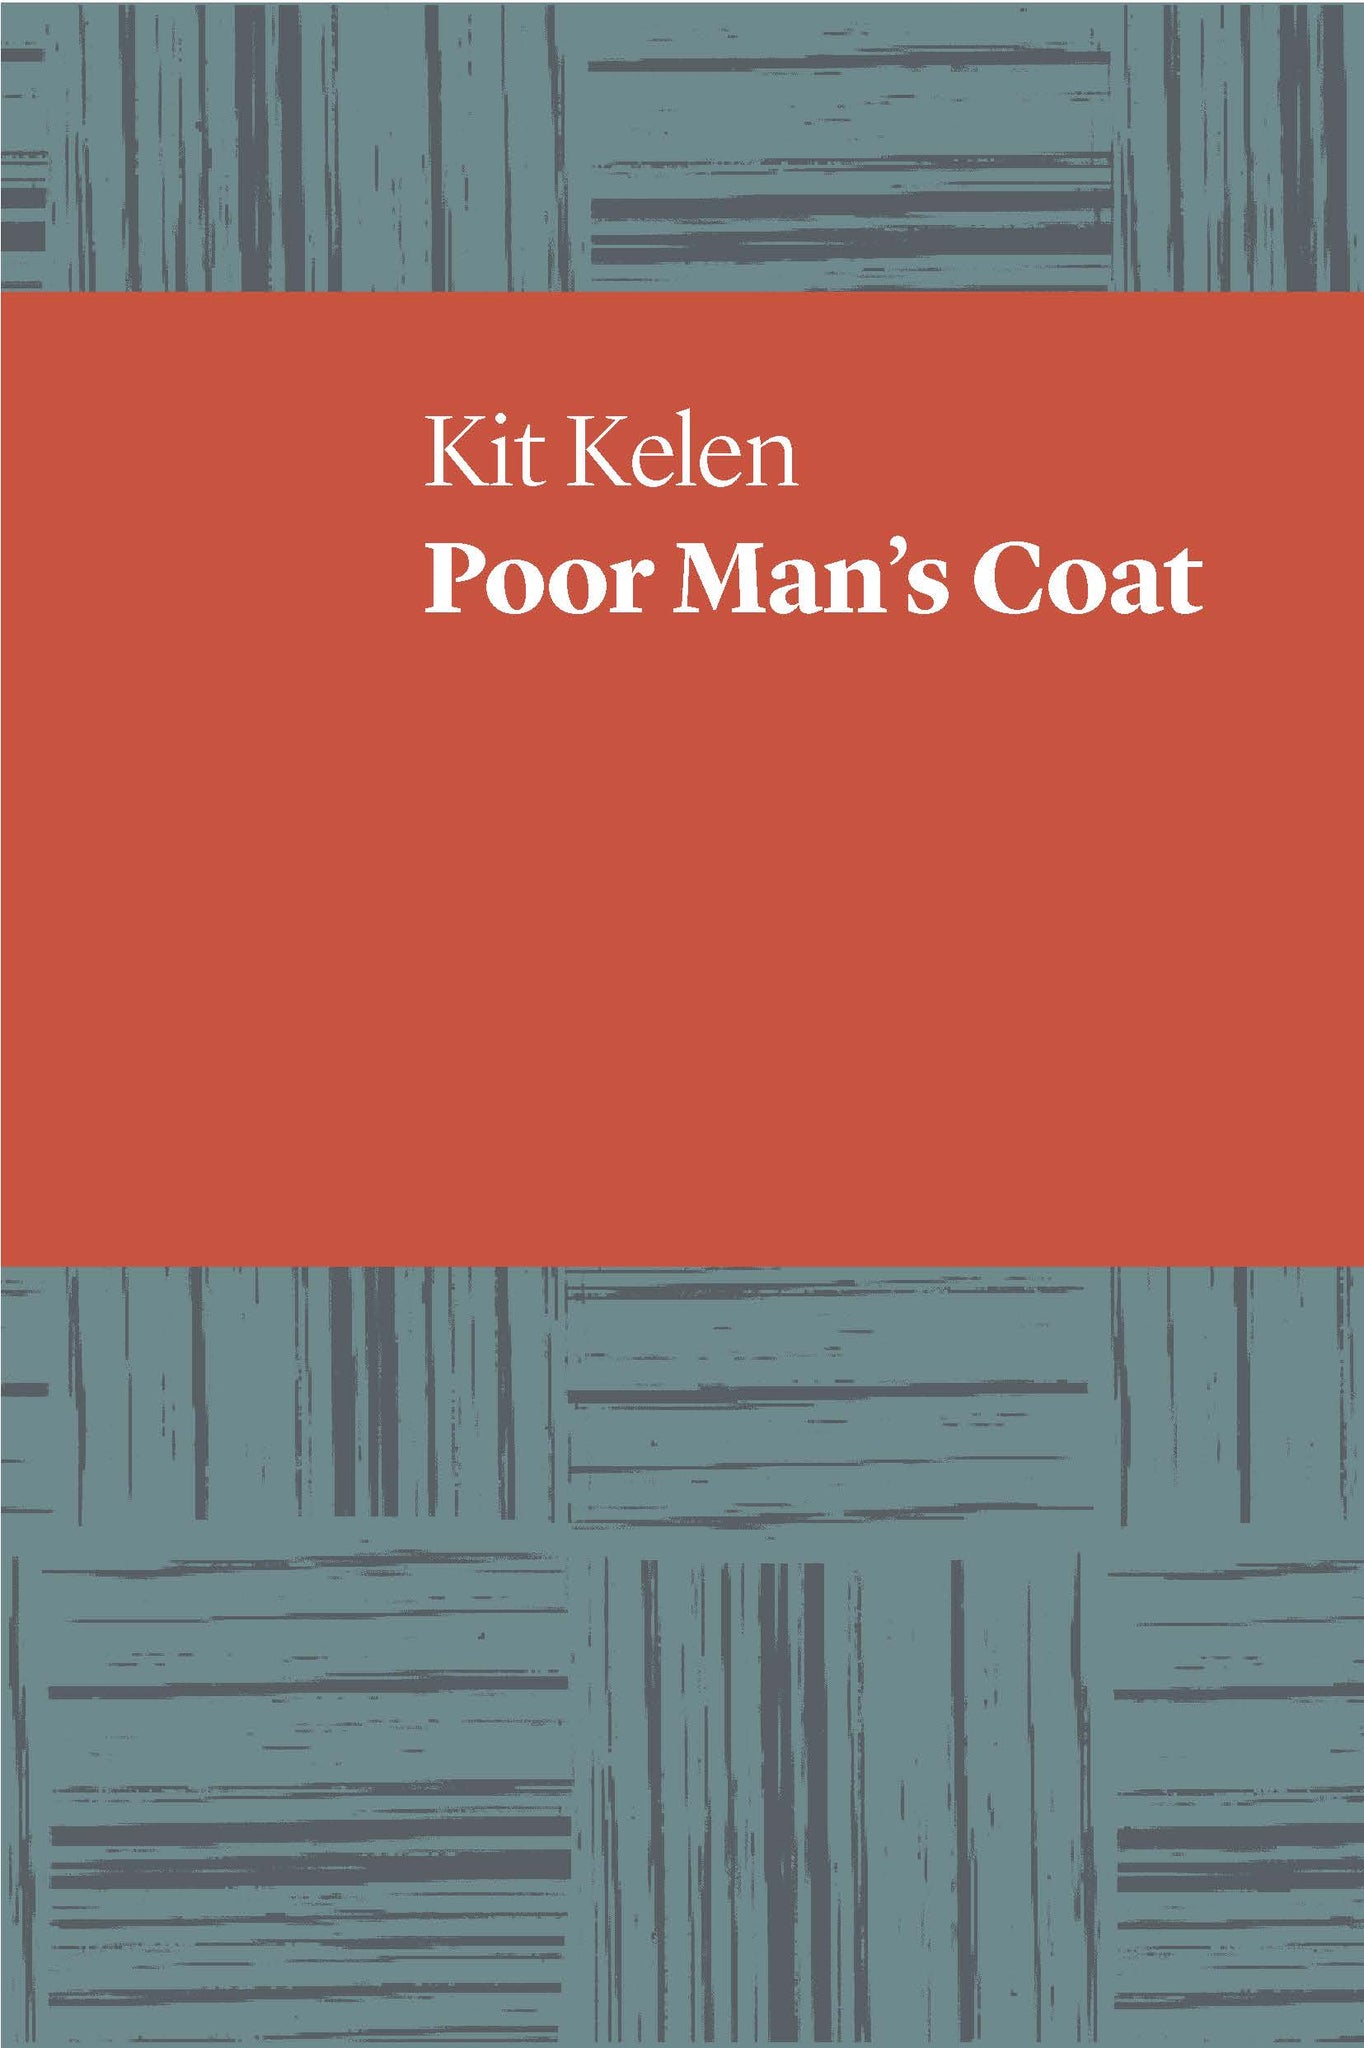 Poor Man's Coat: Hardanger Poems